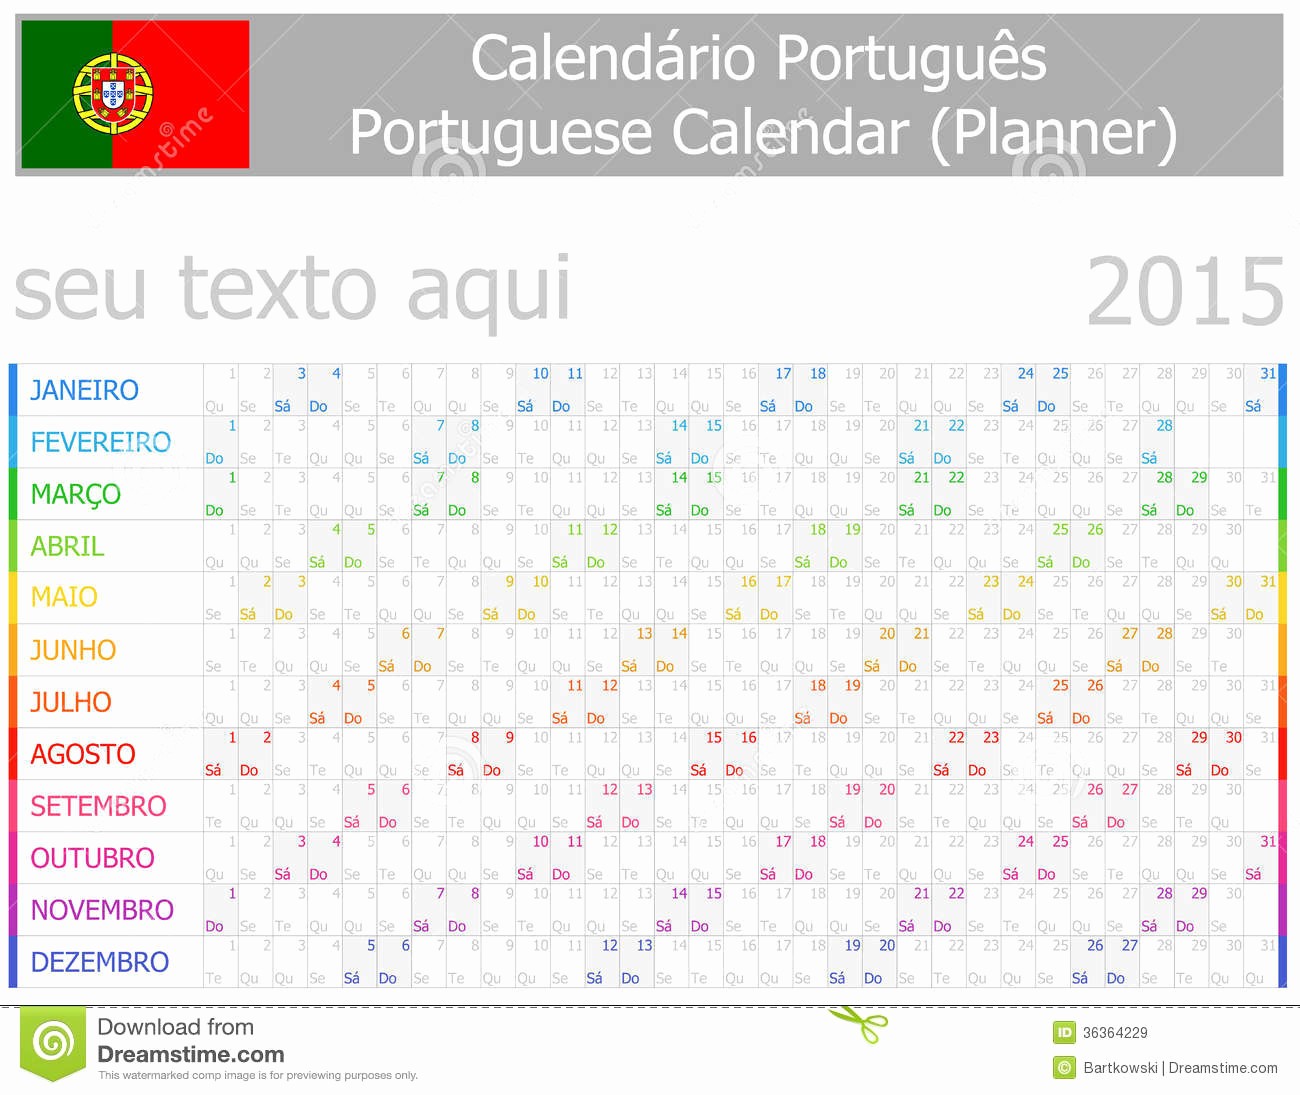 Days Of the Week Horizontal Elegant 2015 Portuguese Planner 2 Calendar with Horizontal Months